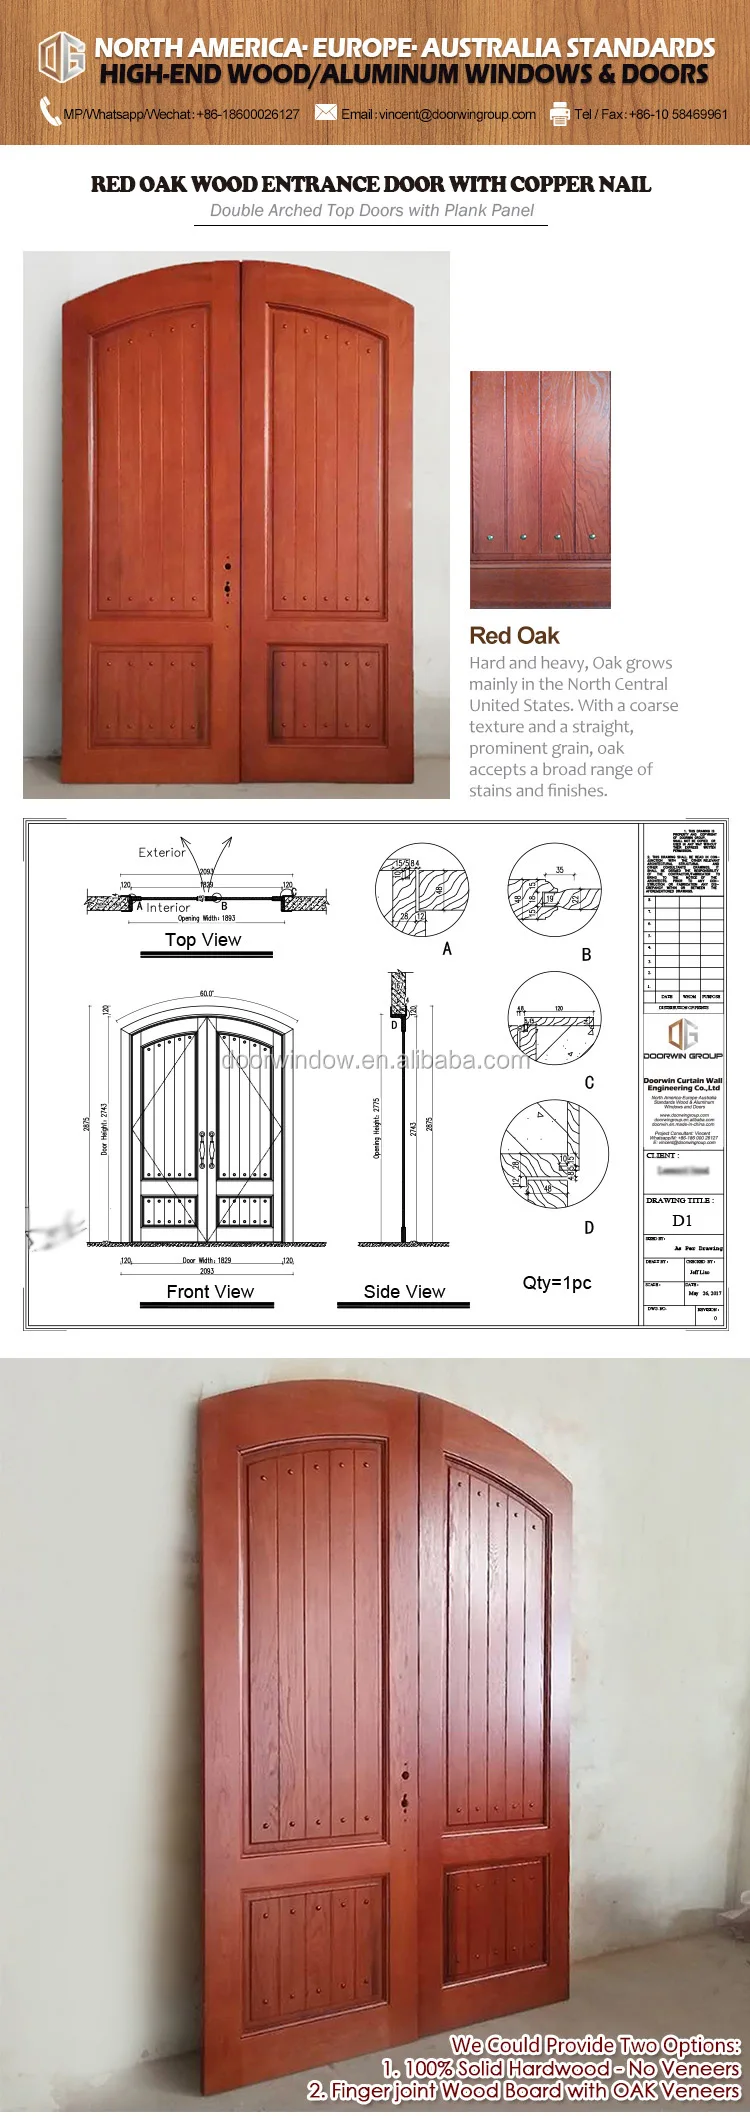 American doors New Design oak teak Wooden Round Top solid wood arched double antique carved doors